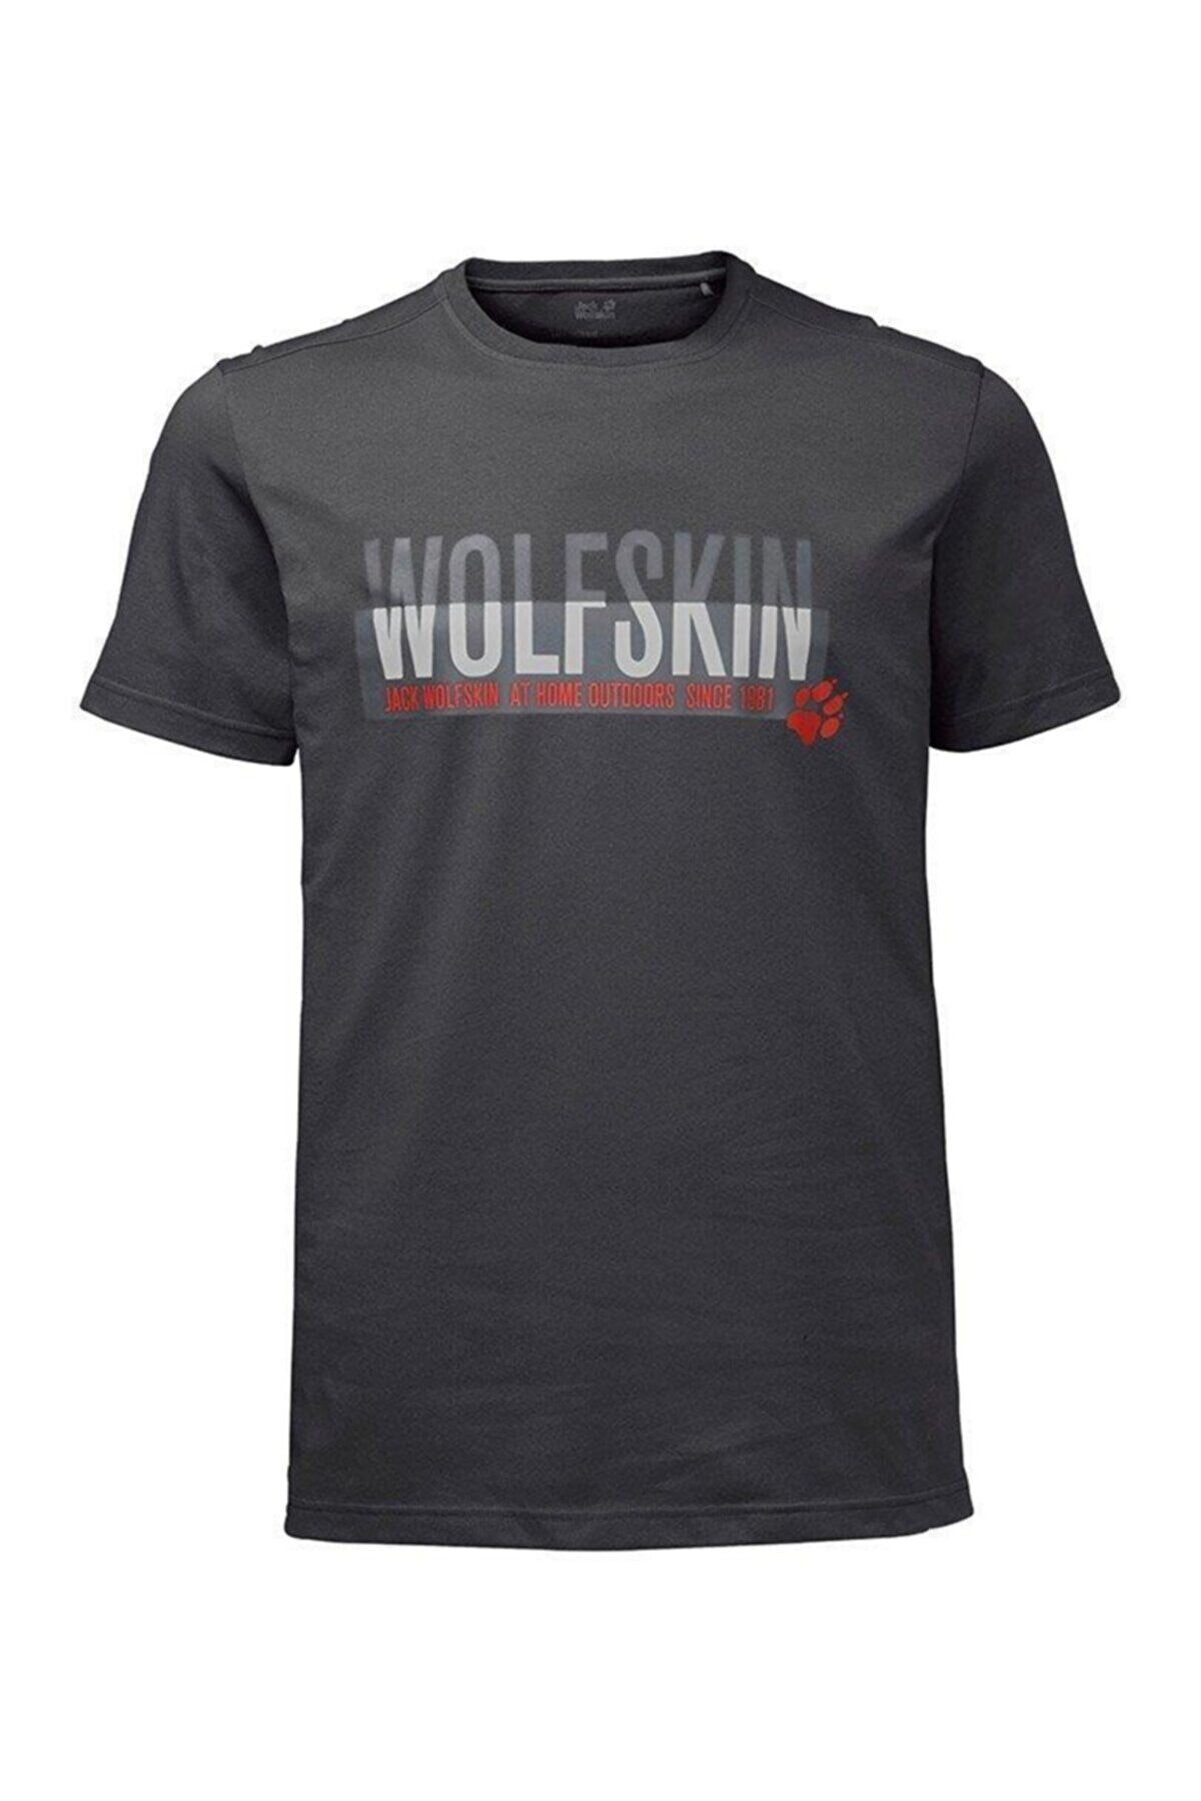 Jack Wolfskin Slogan Tee Erkek T-shirt - 1805641-6352